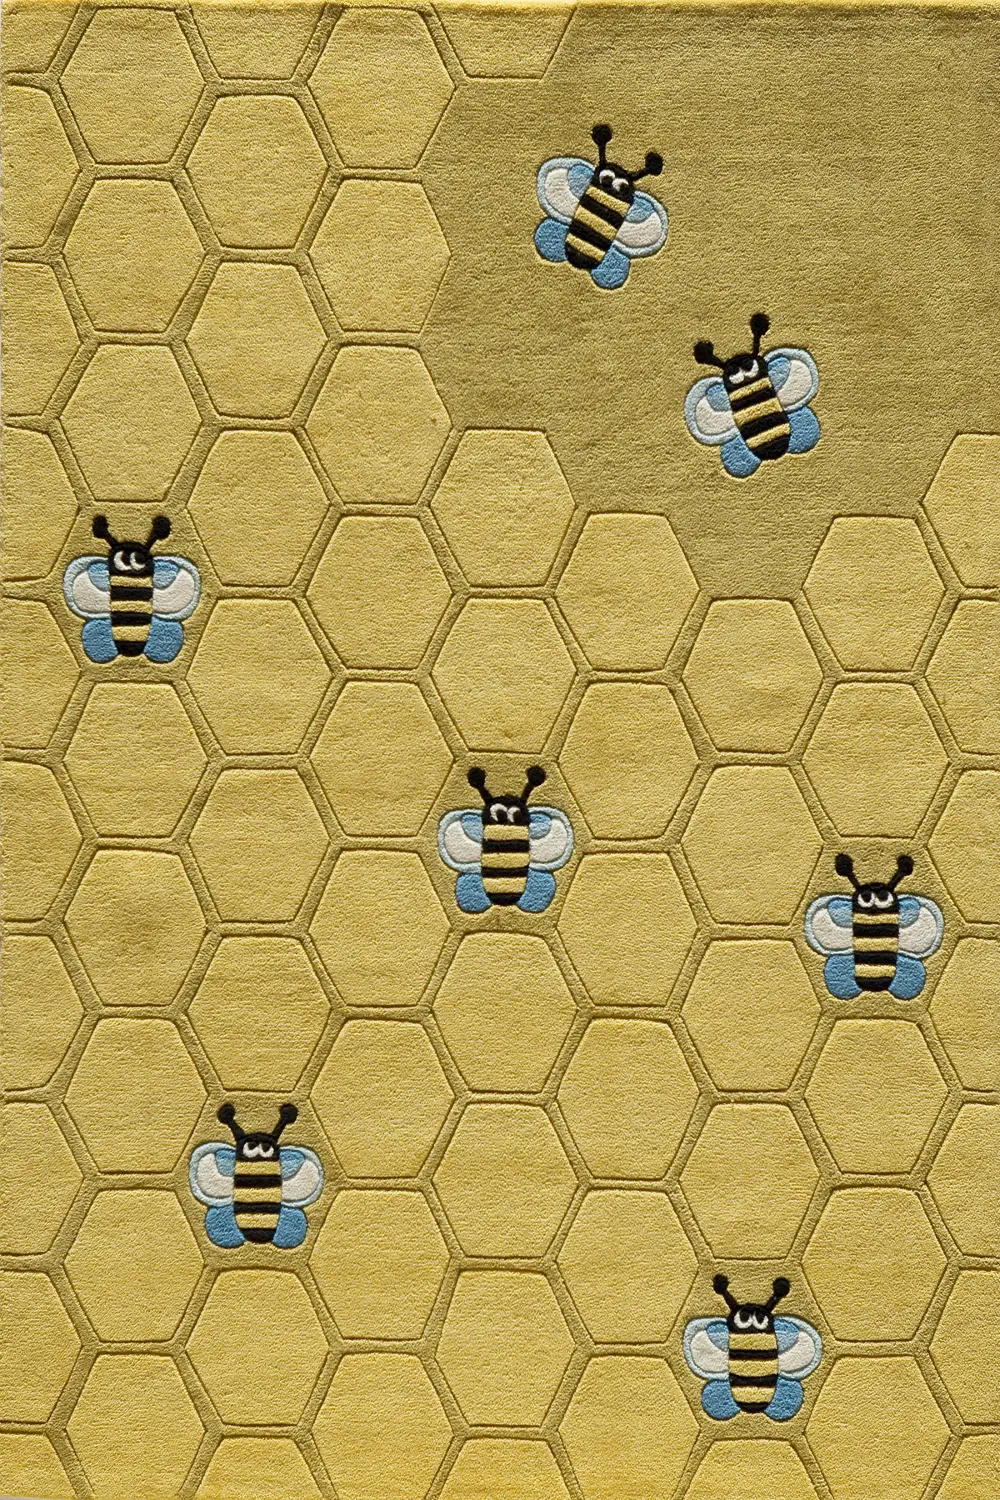 5 x 7 Medium Honeycomb Gold Area Rug - Whimsy-1